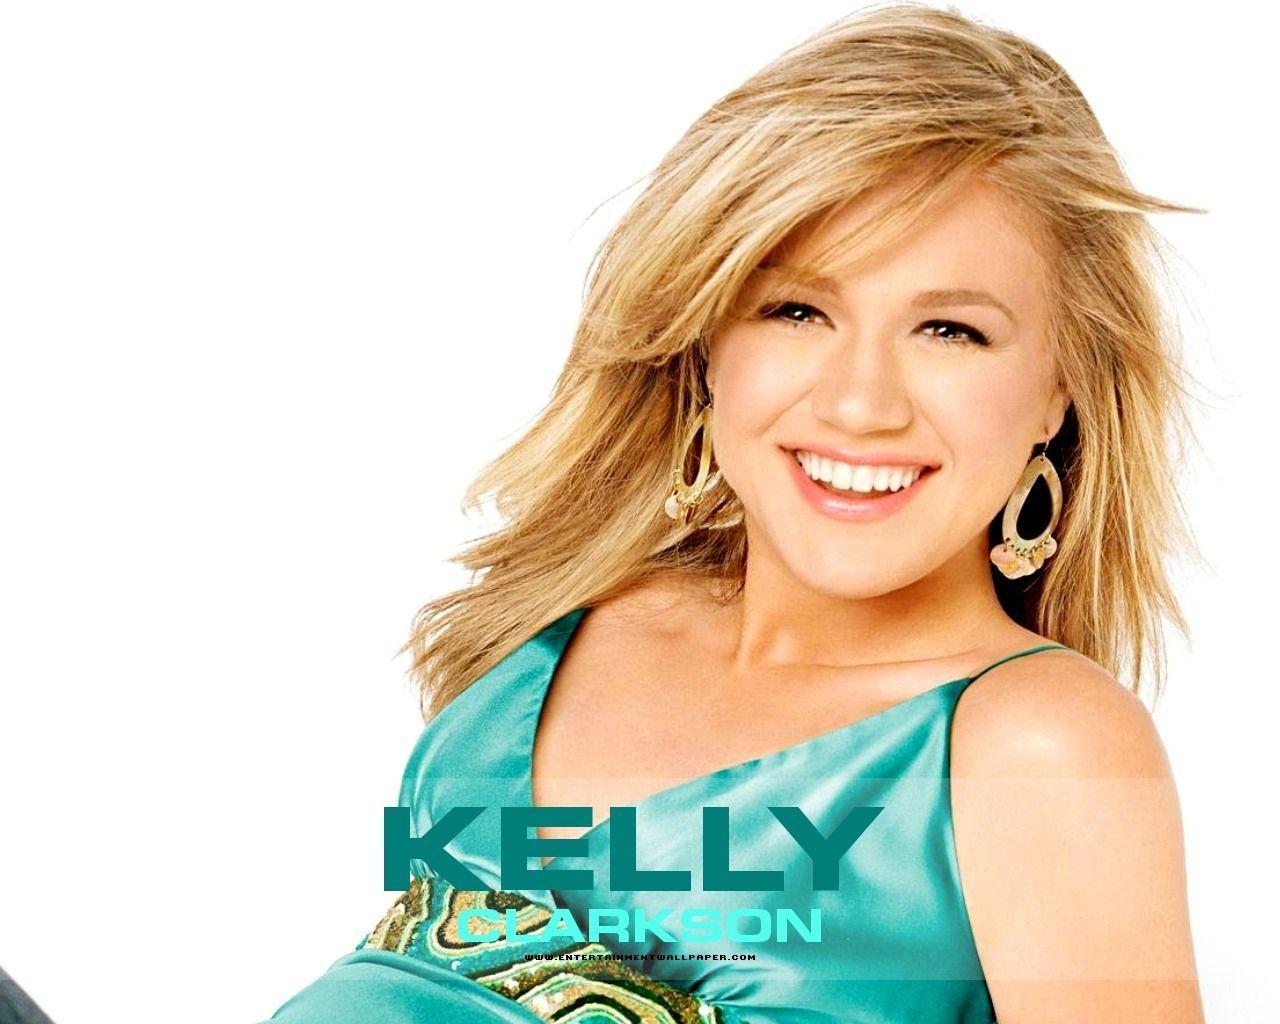 Hot Woman Wallpaper: Kelly Clarkson Wallpaper 3